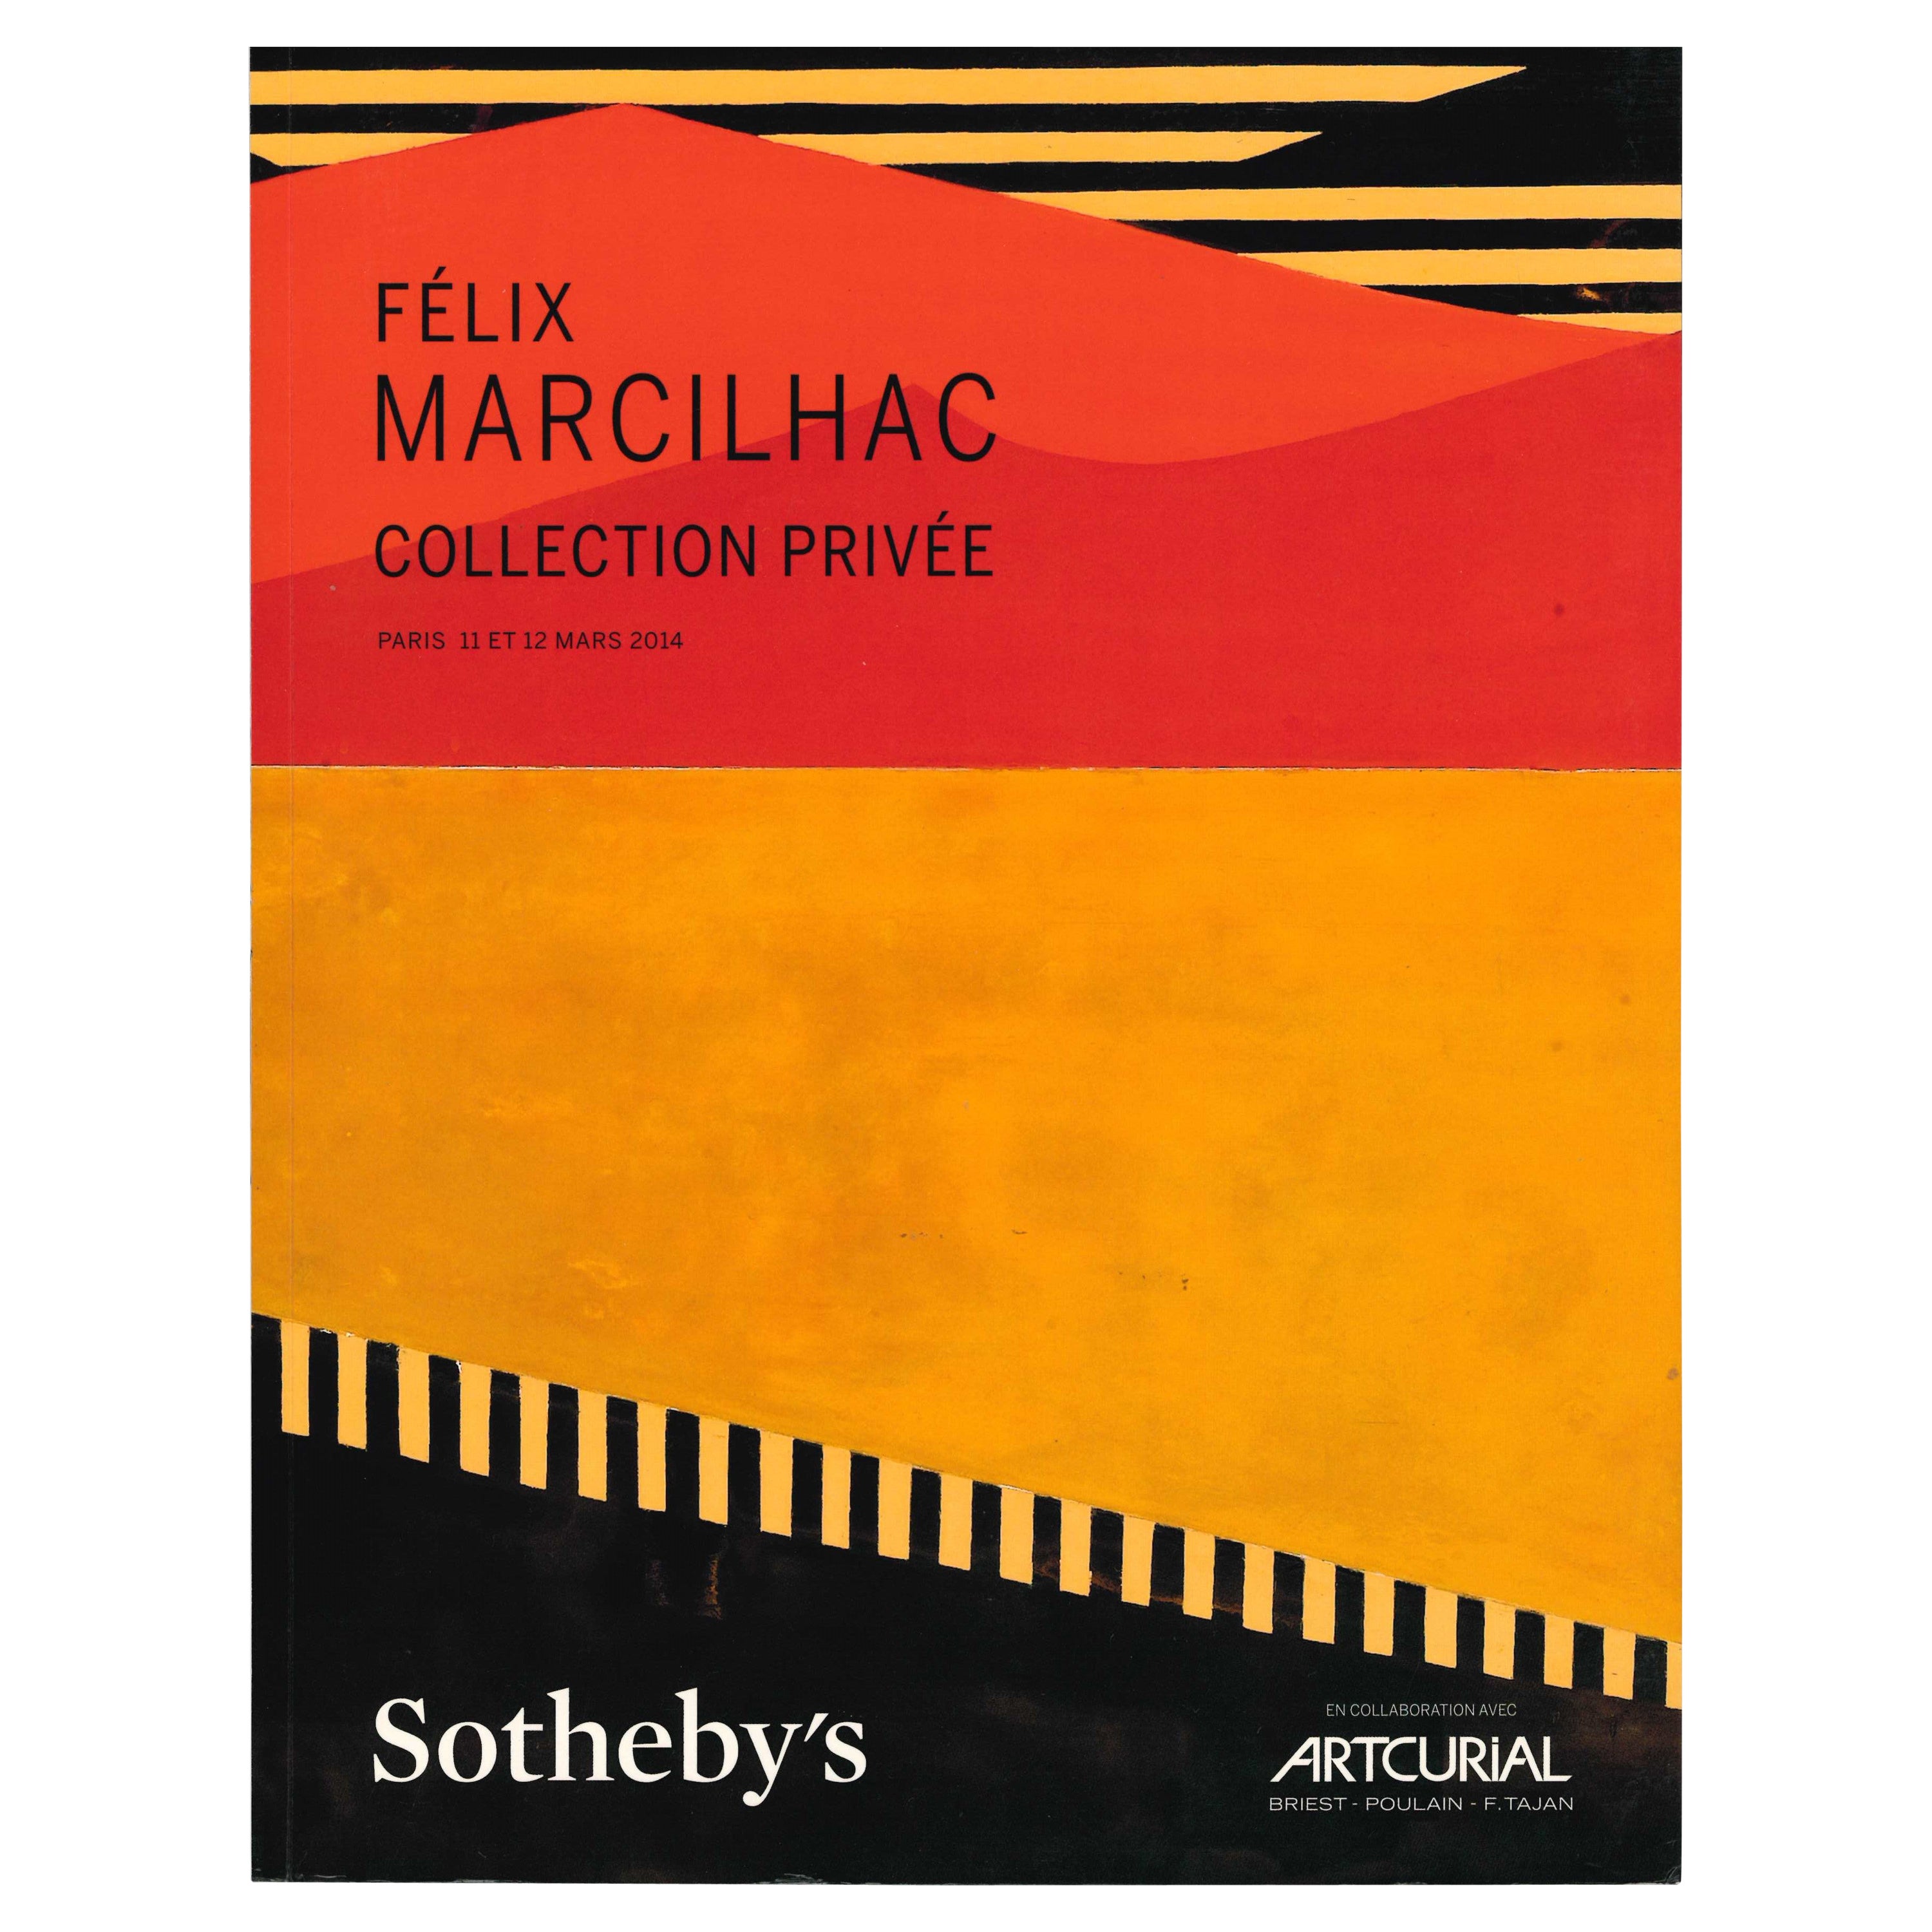 Felix Marcilhac Collection Privee, Sotheby's Catalogue, 2014